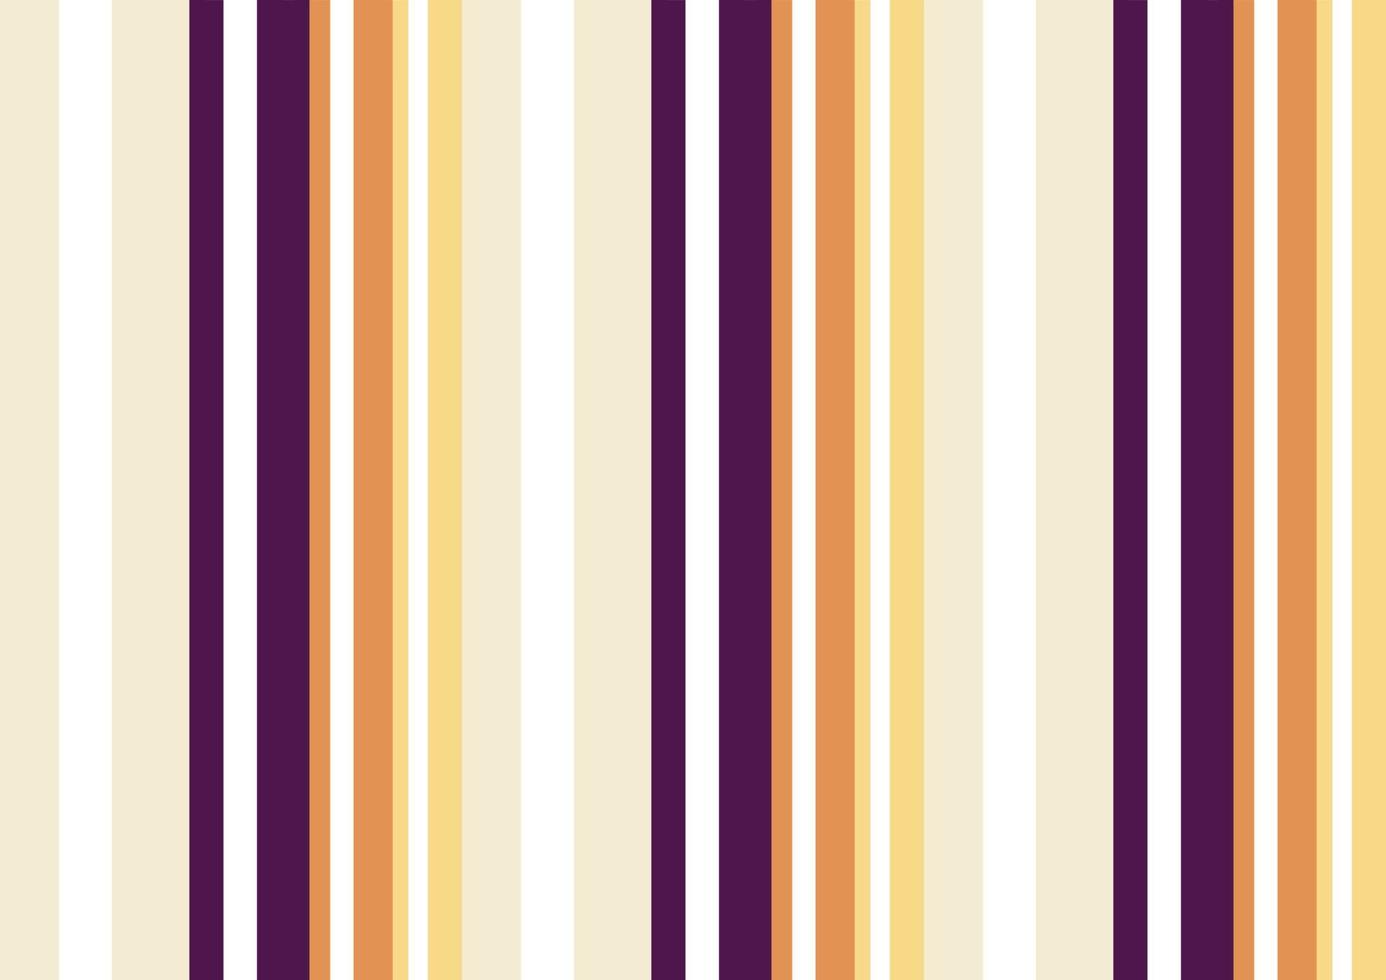 Balanced Stripes pattern seamless fabric prints vector